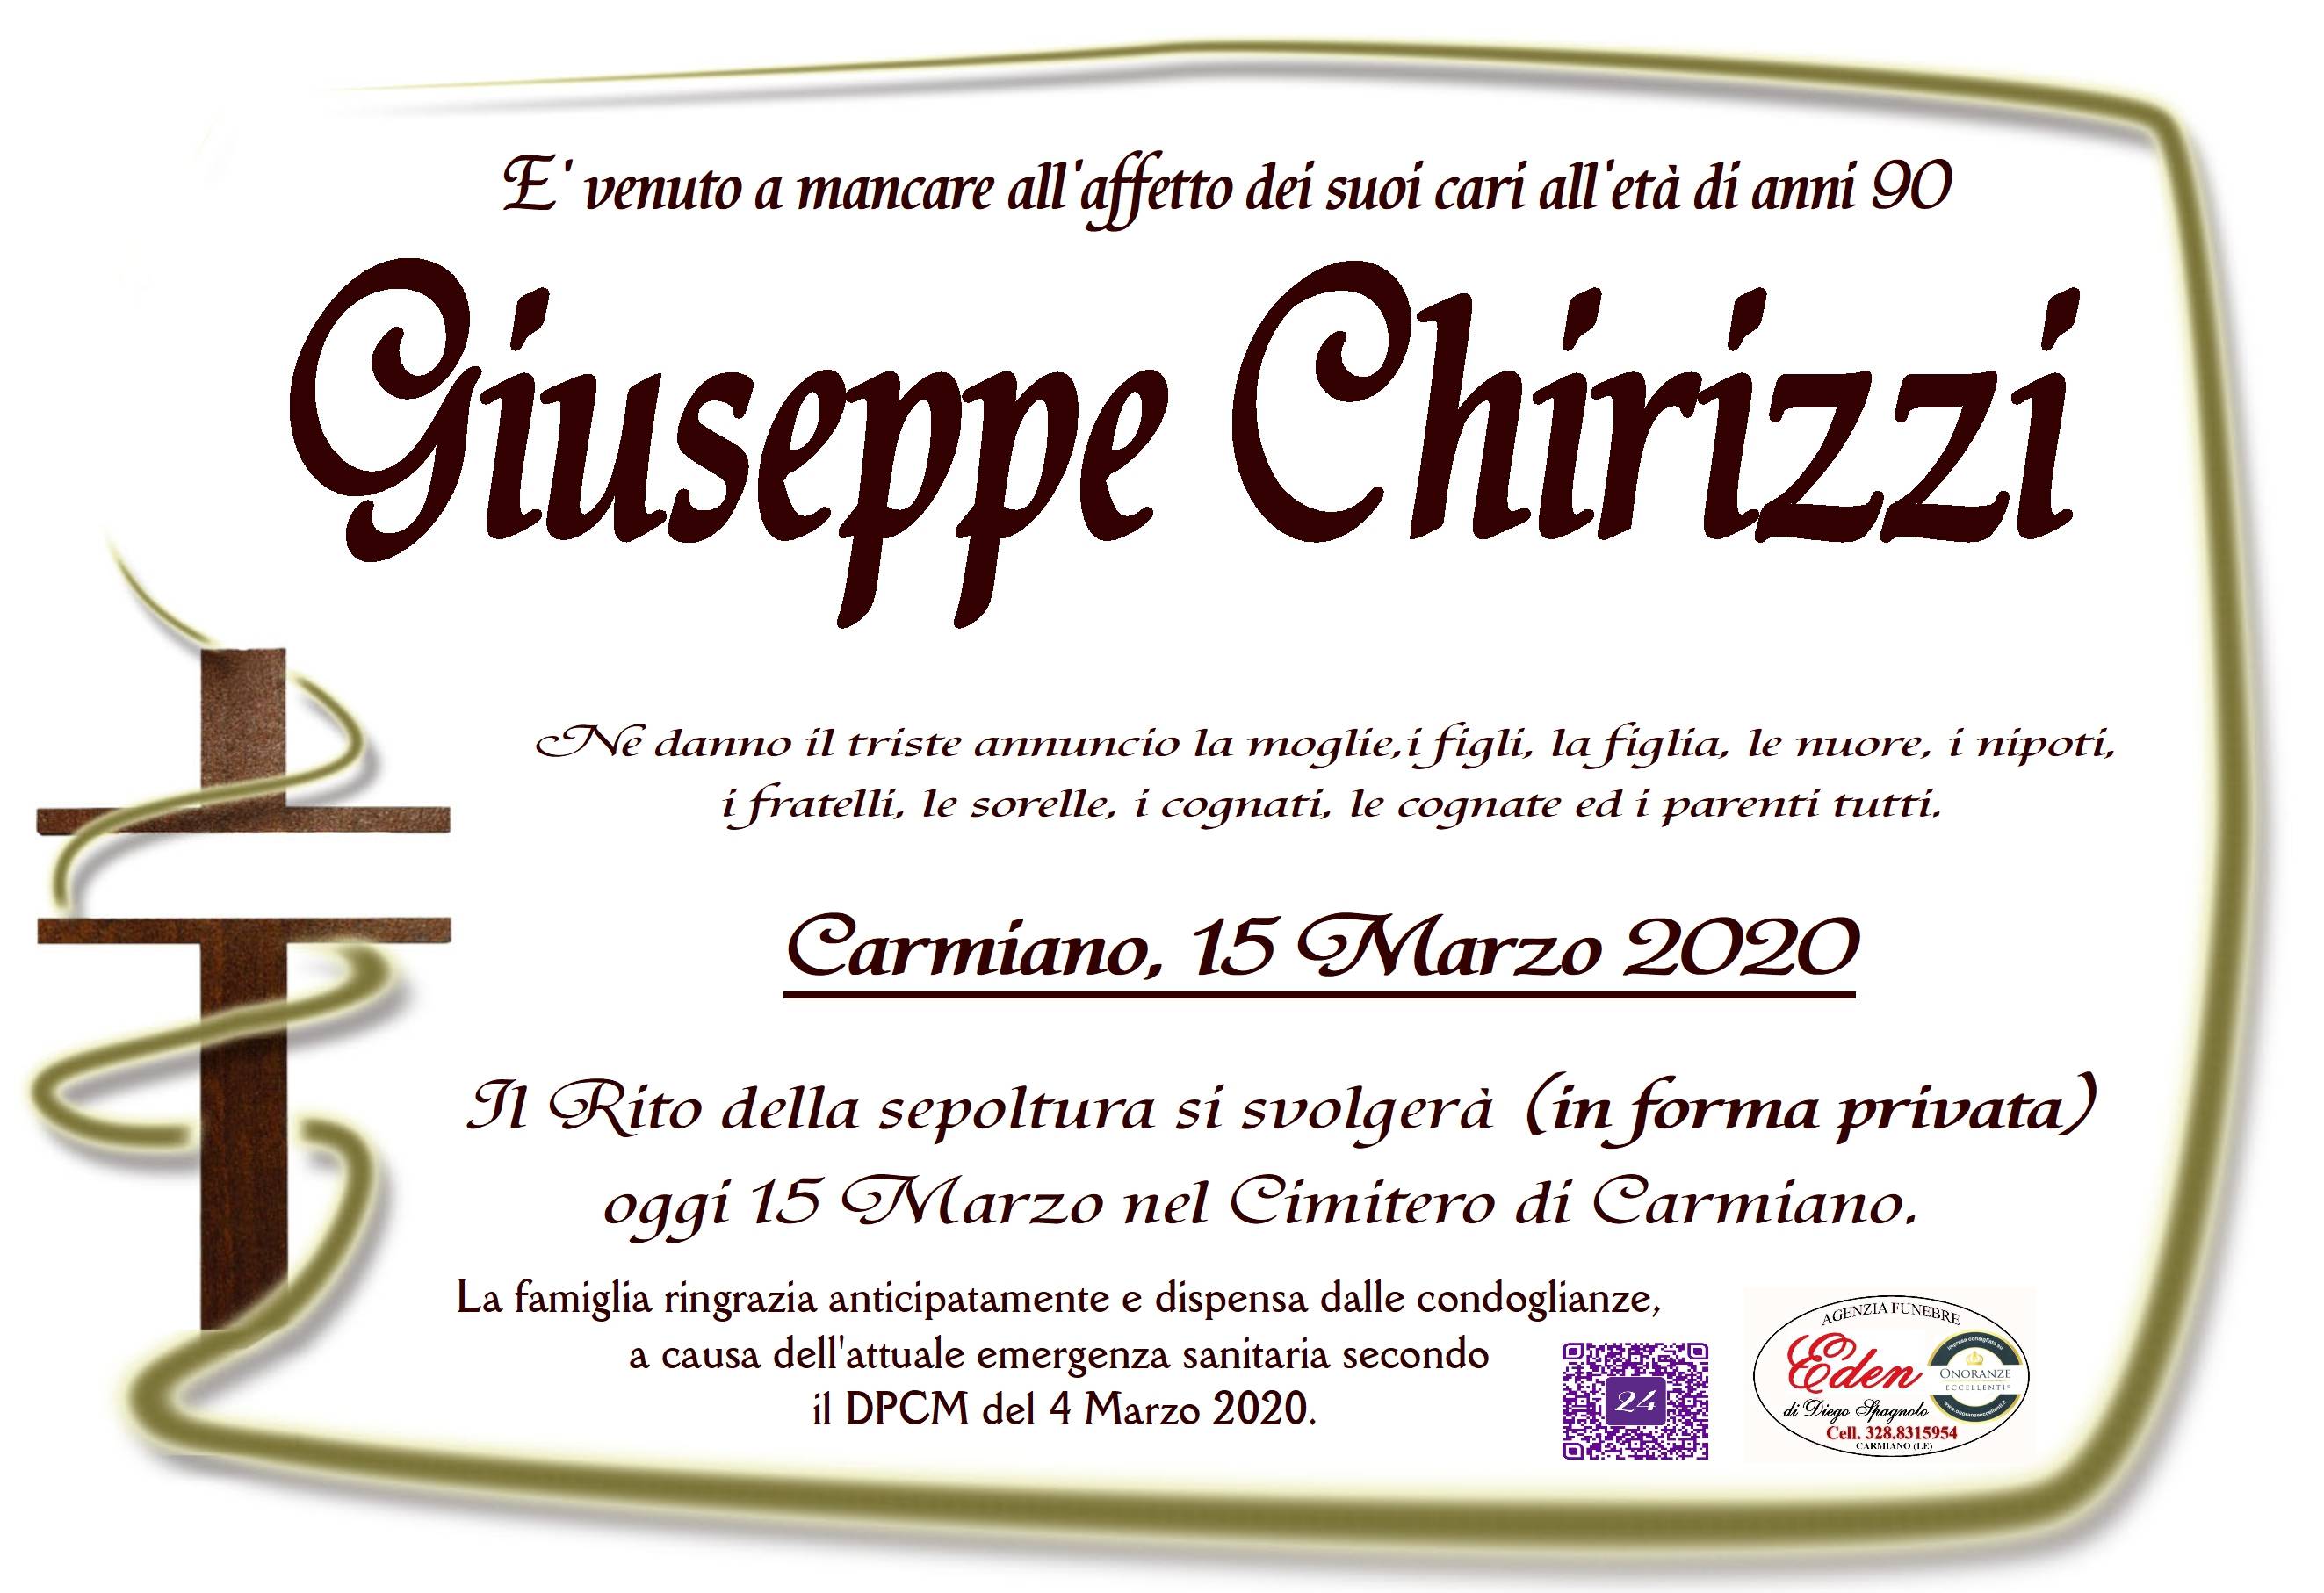 Giuseppe Chirizzi